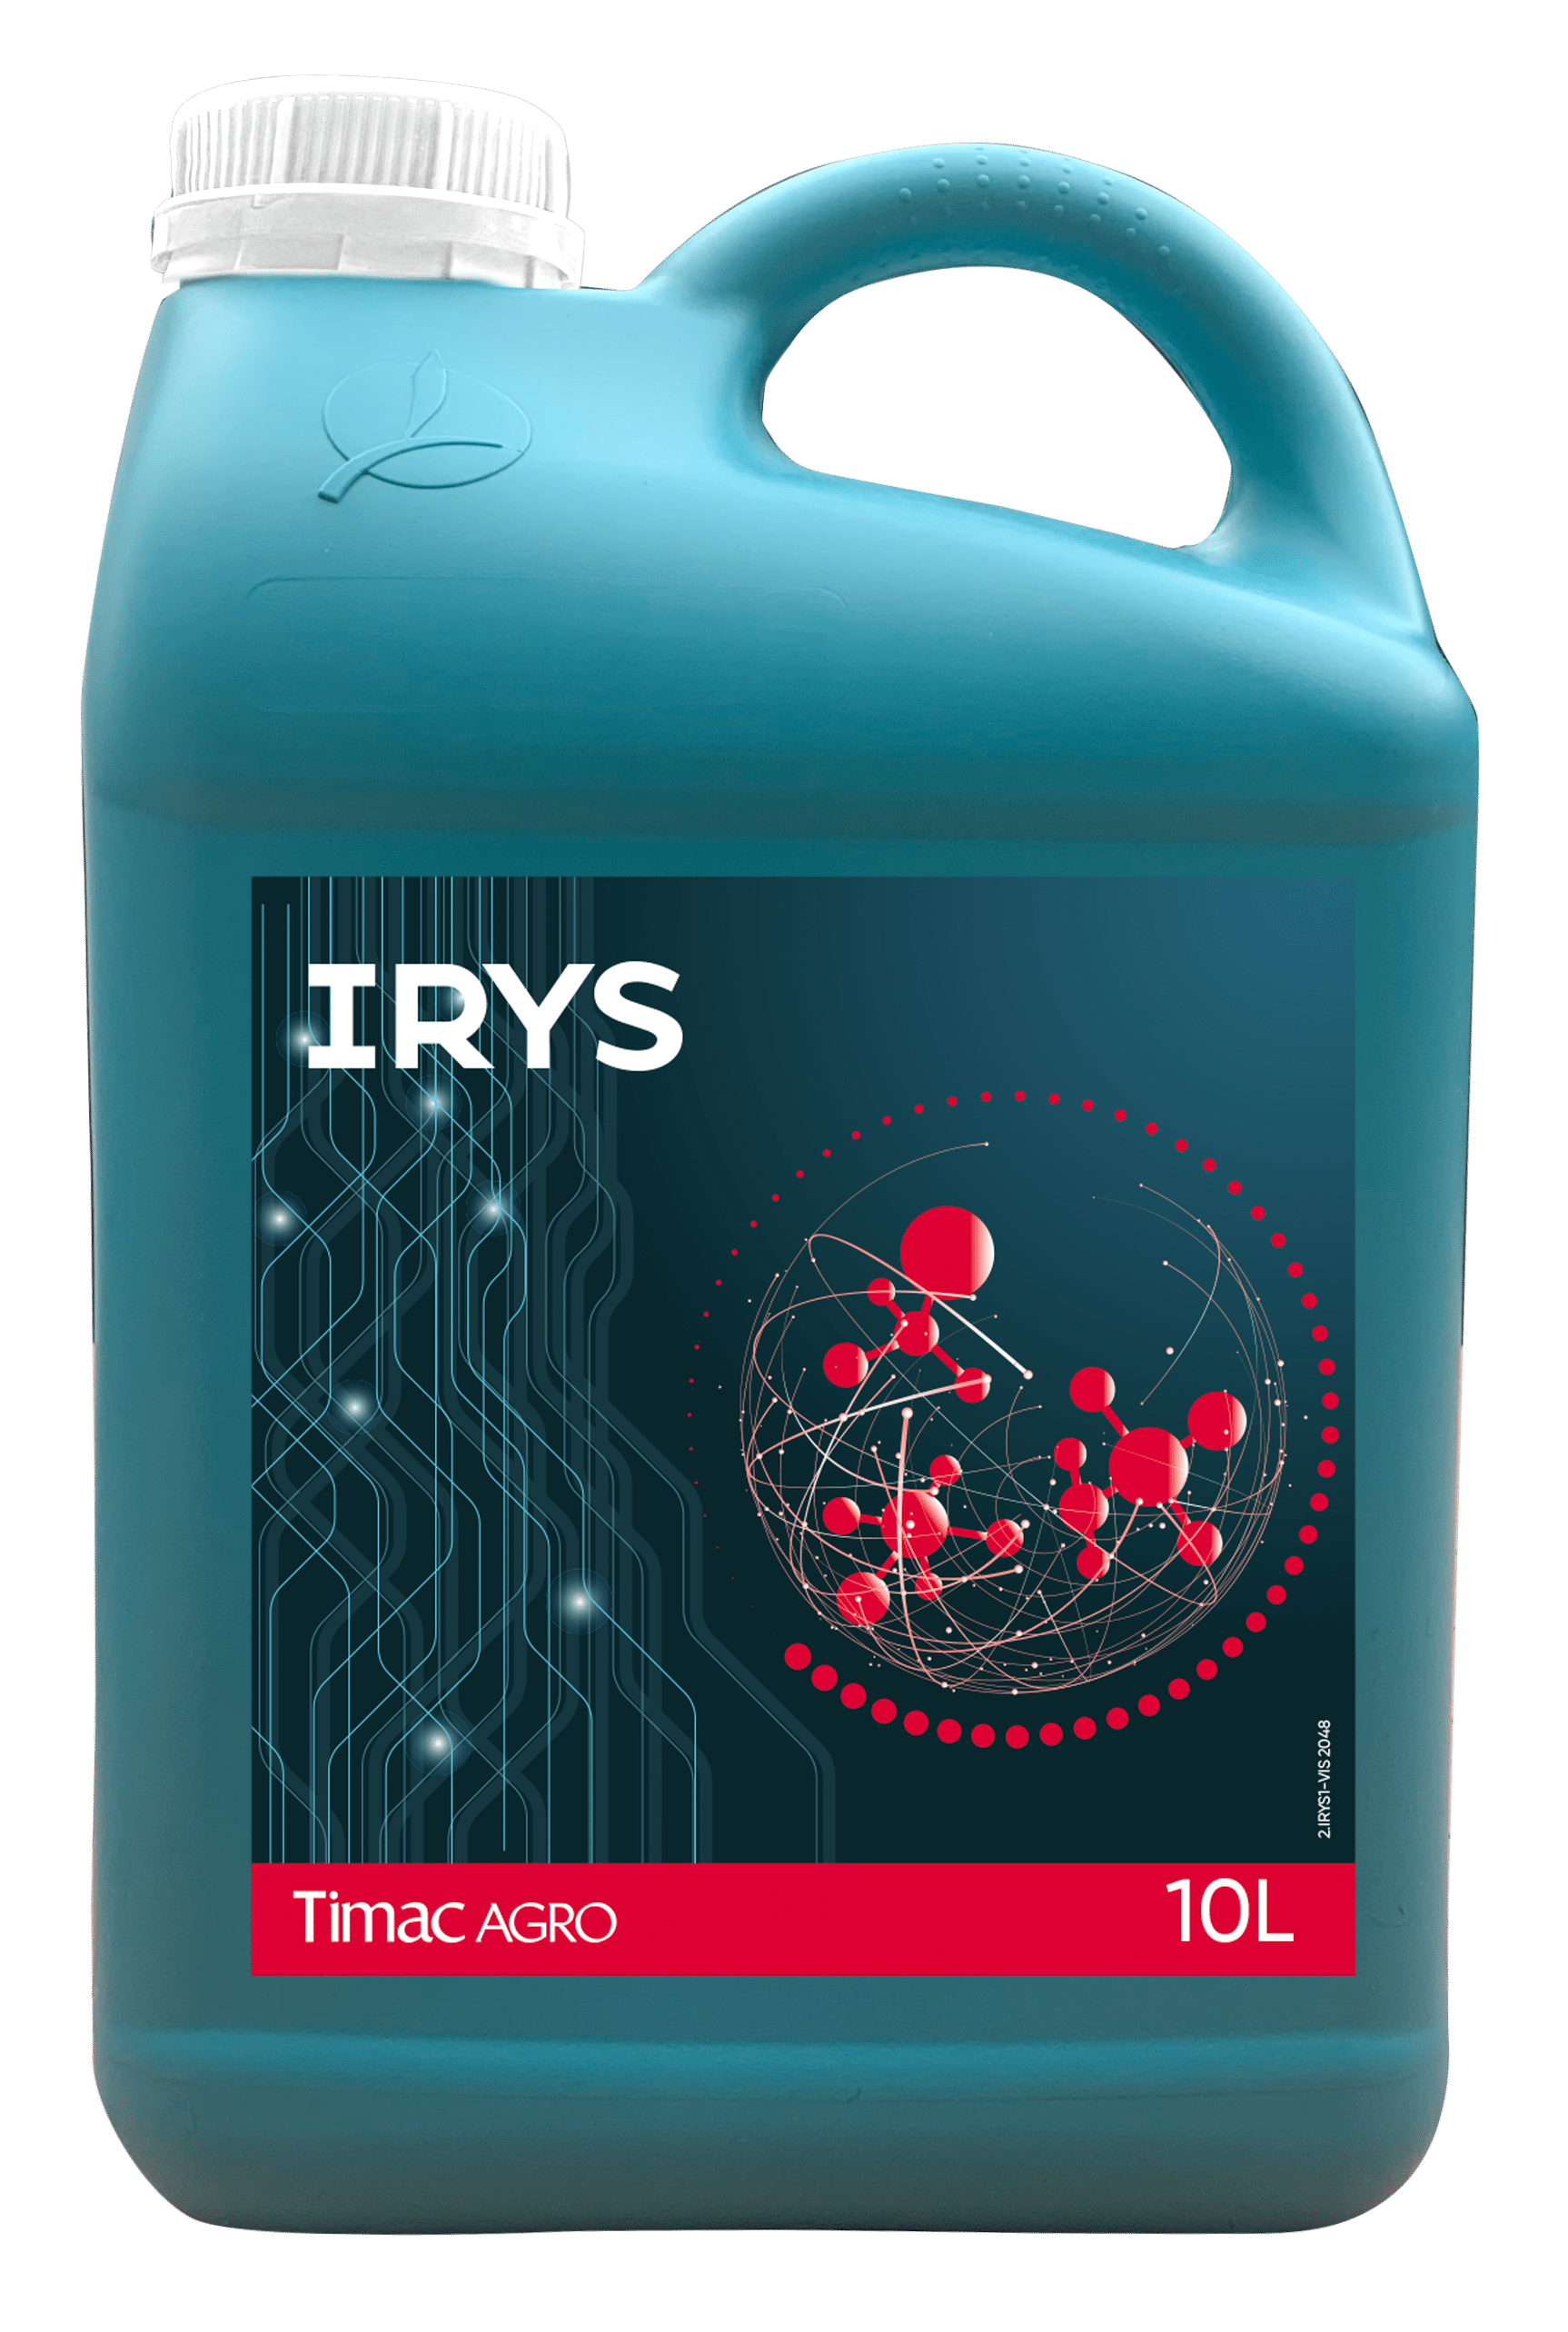 IRYS 1